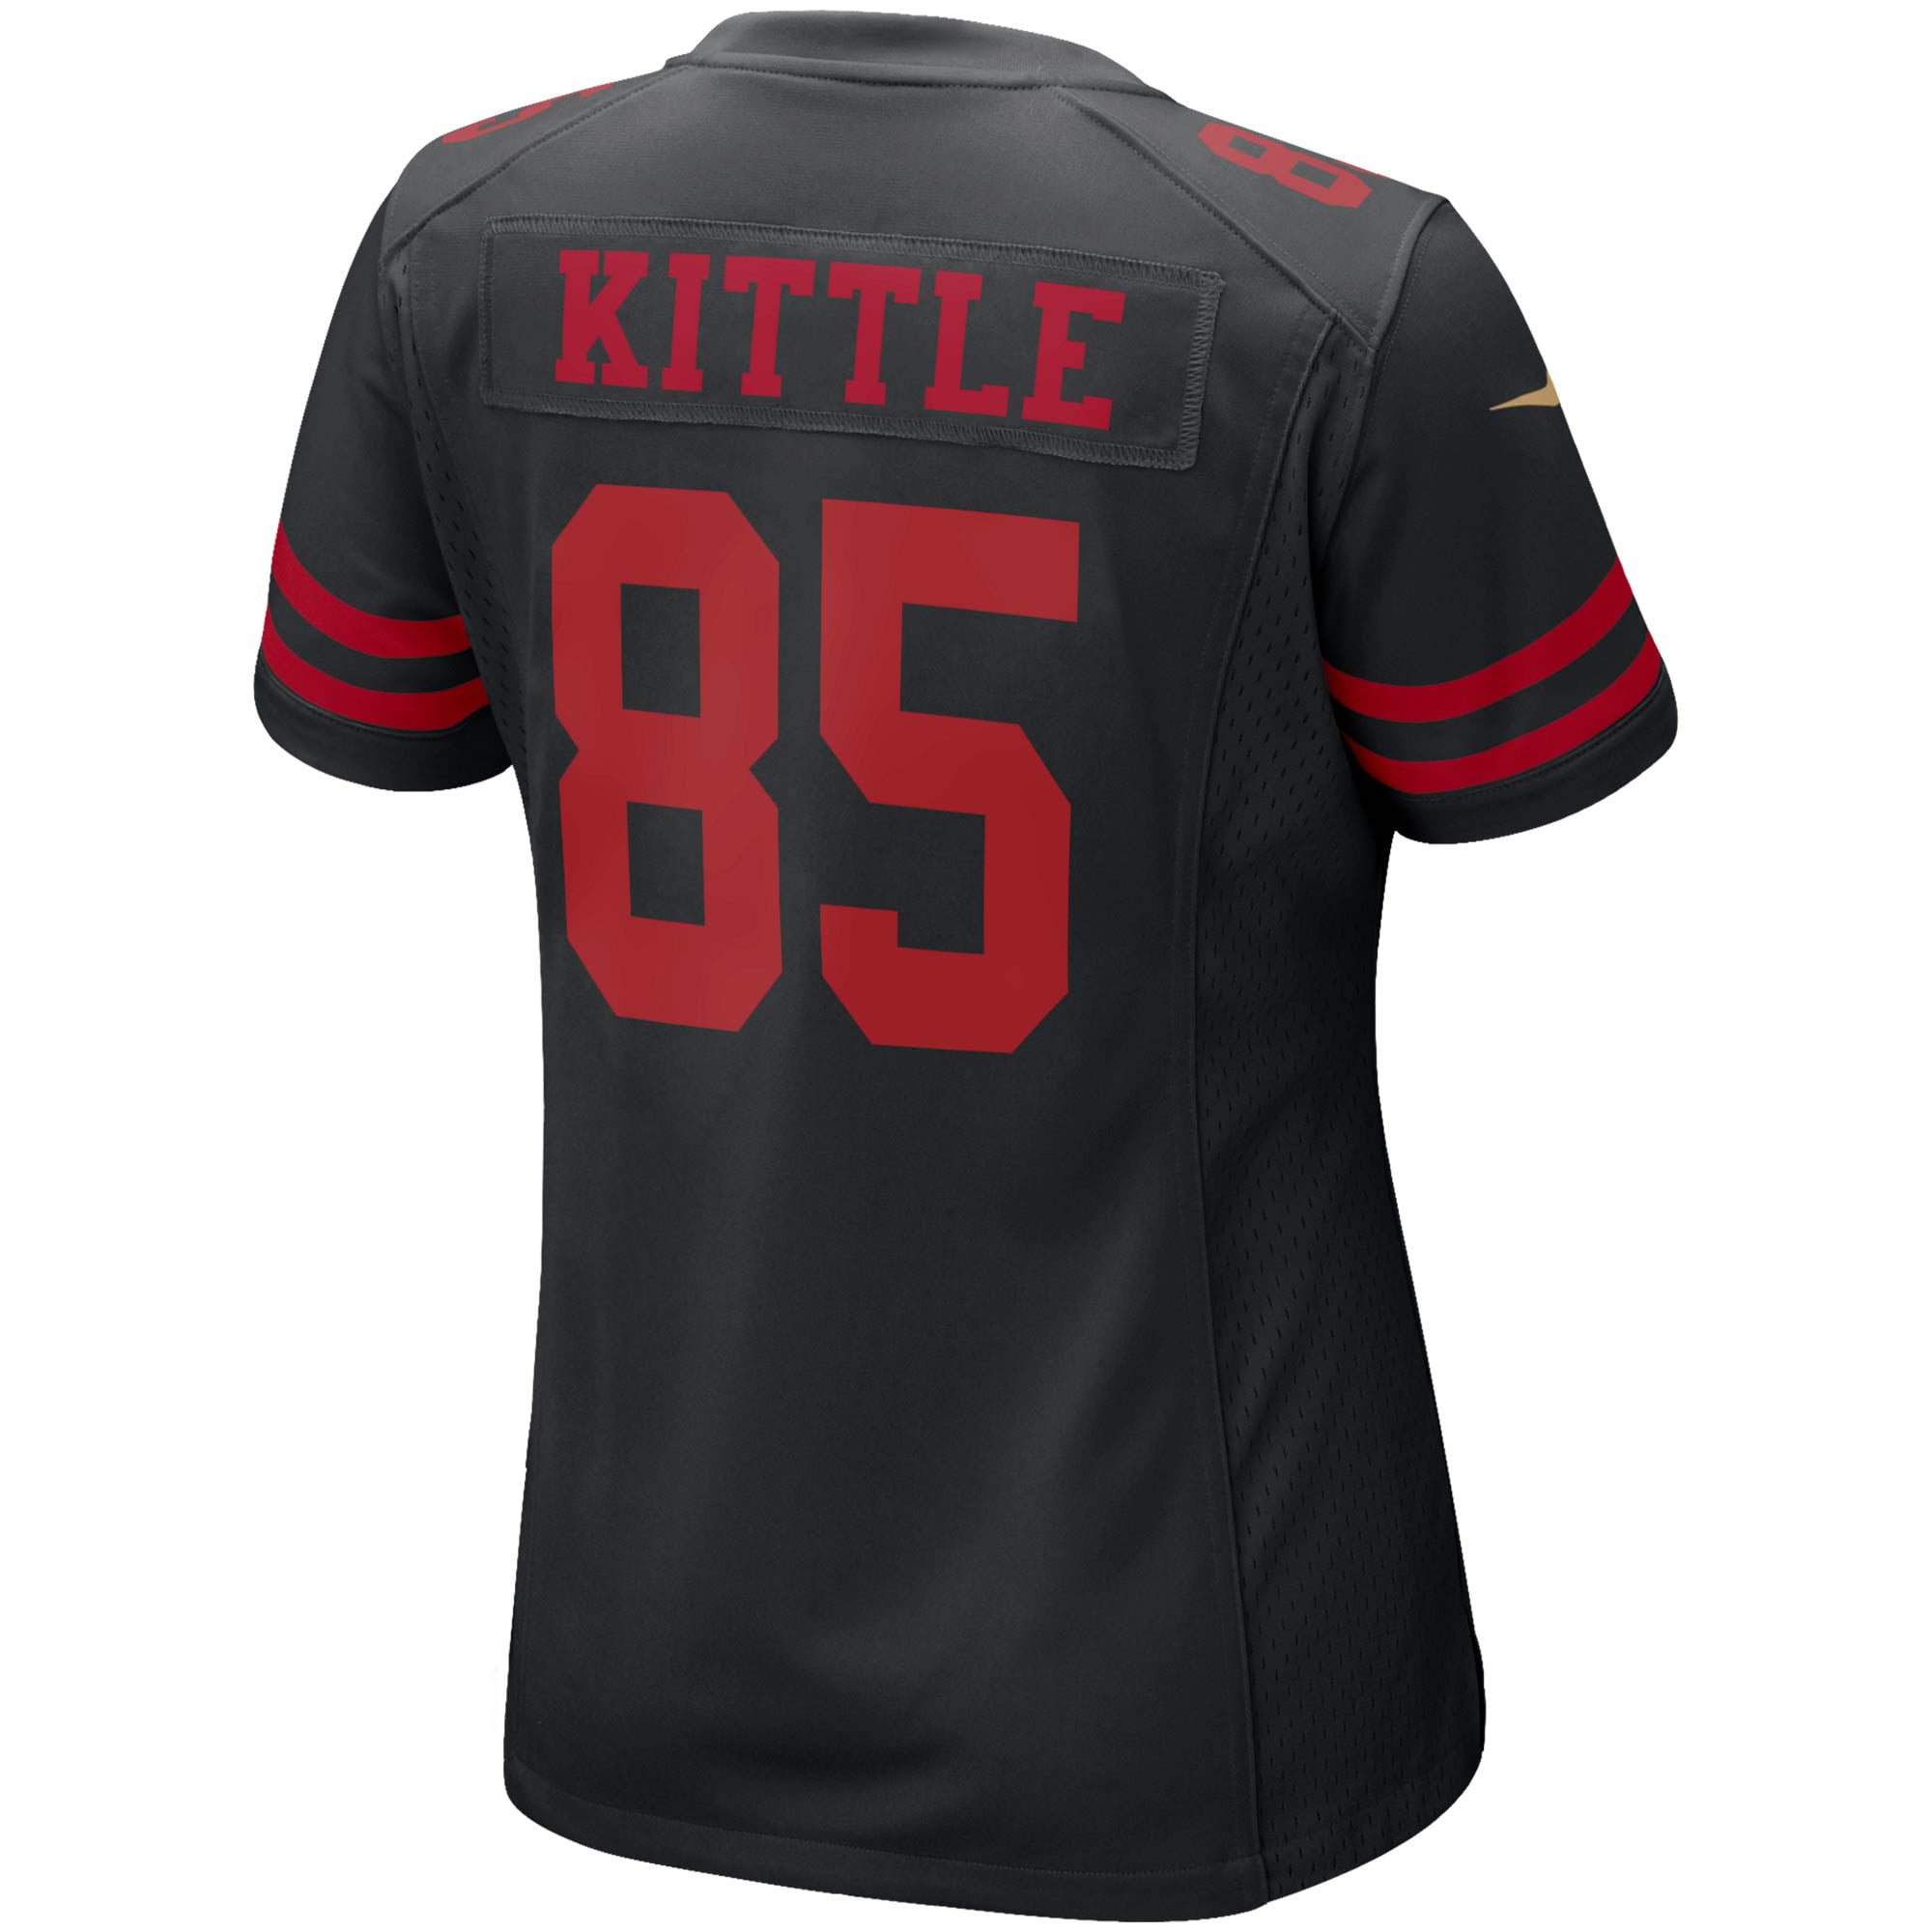 kittle black jersey